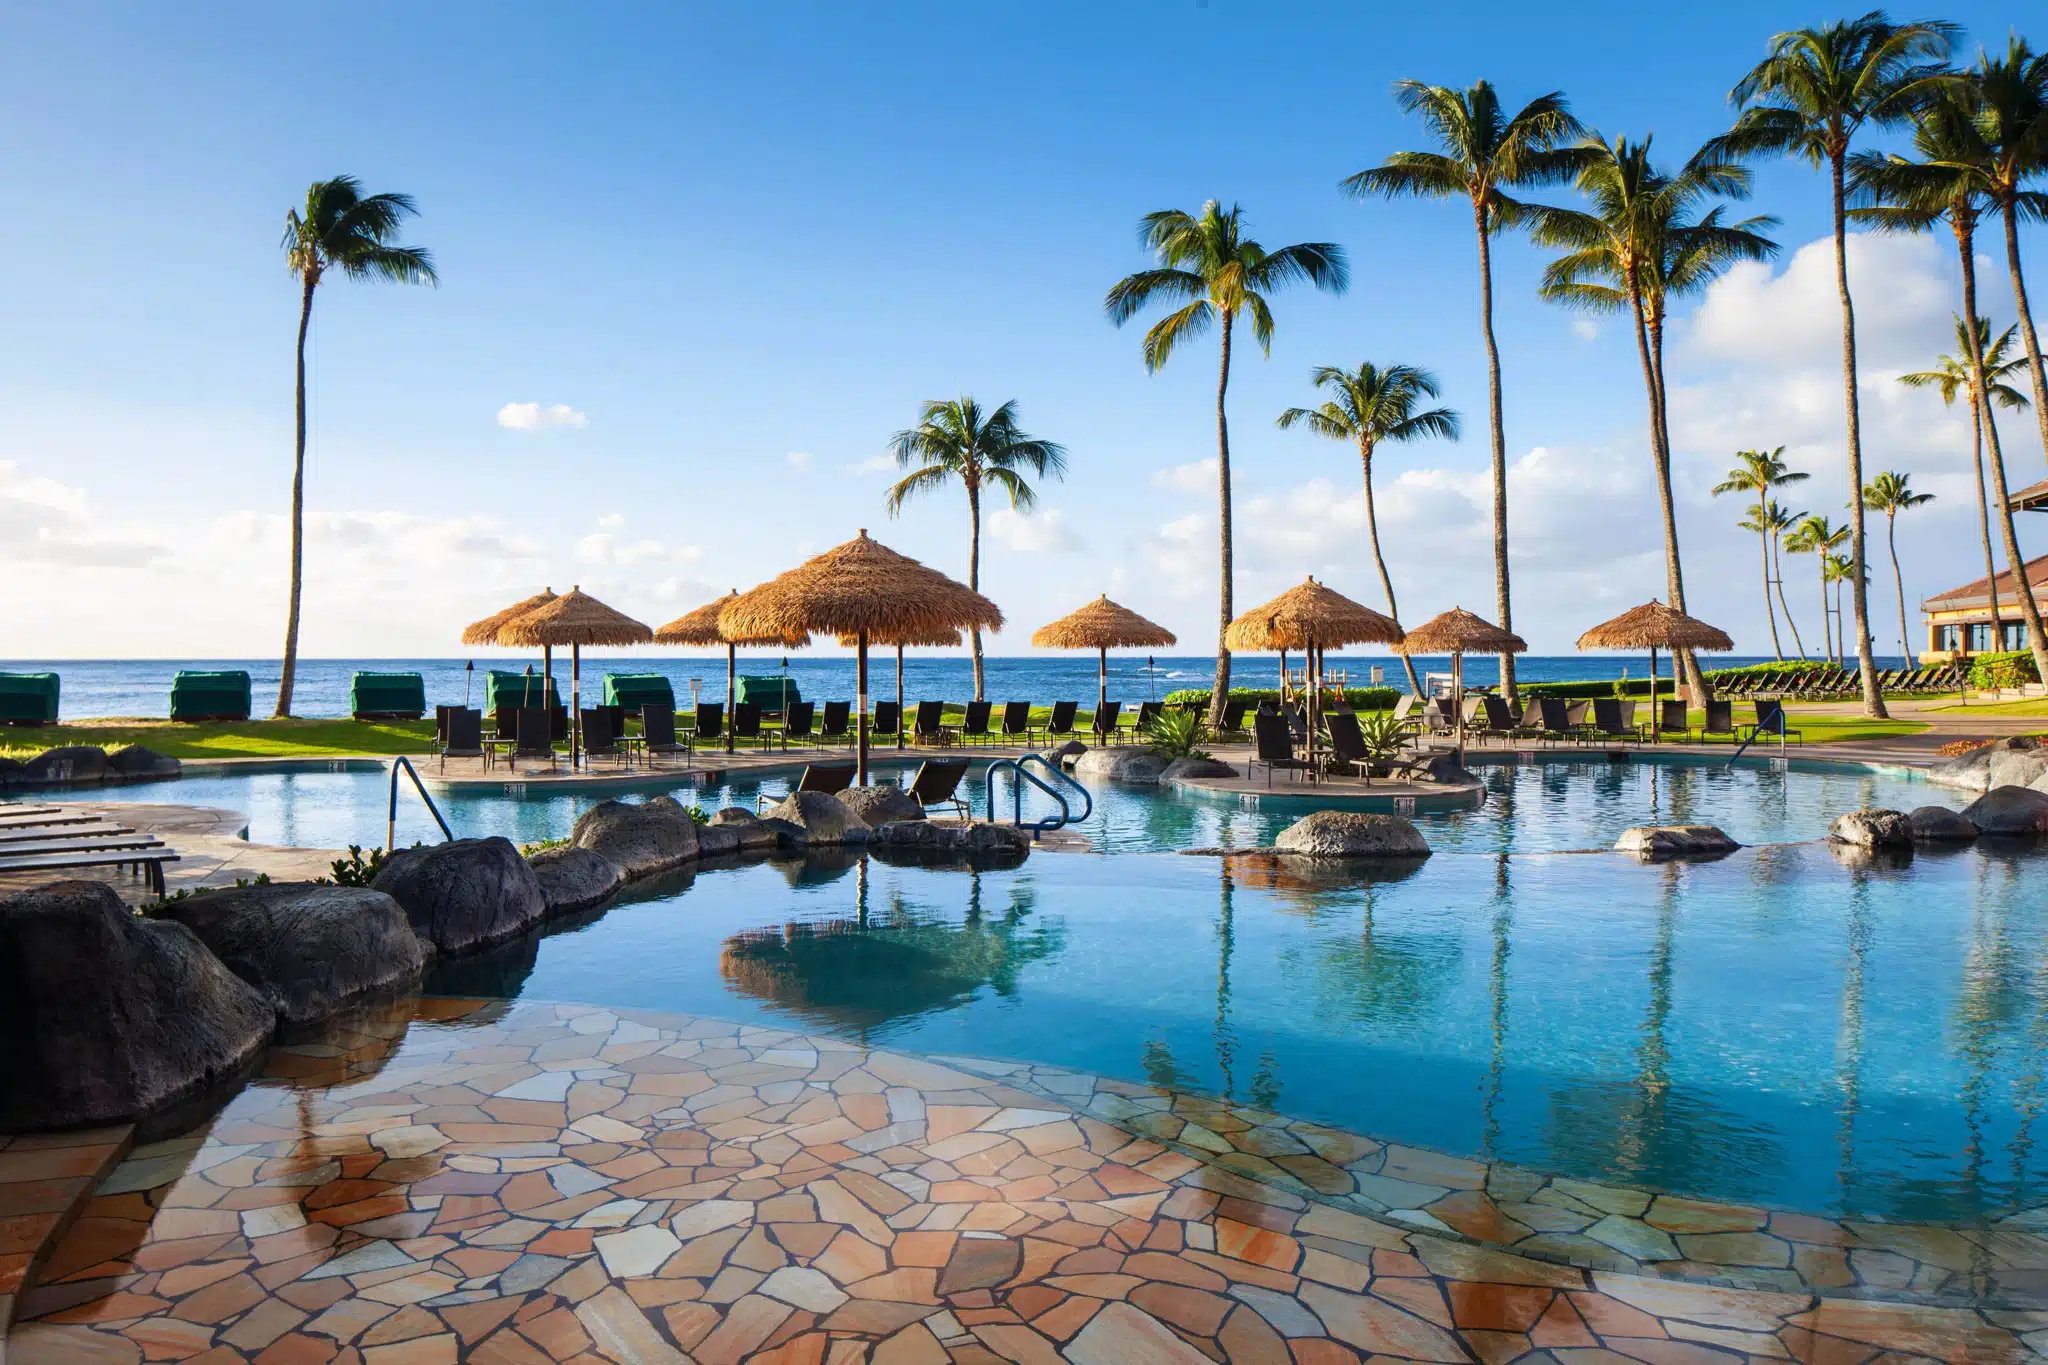 Sheraton Kauai Resort is a Hotel located in the city of Poipu on Kauai, Hawaii